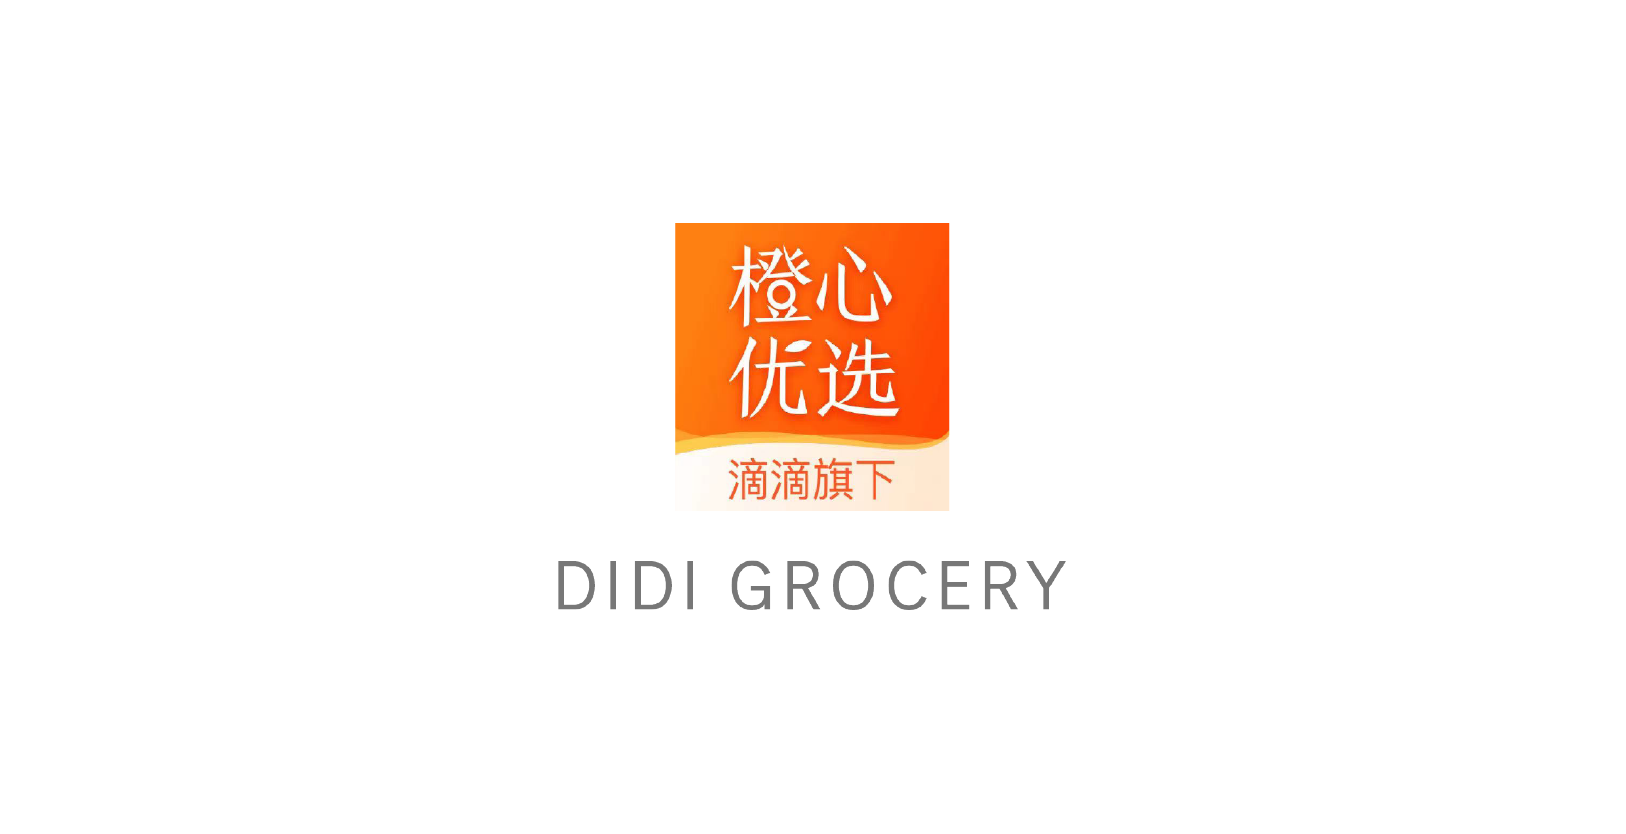 VisionFund Portfolio Company DiDi Grocery's Logo